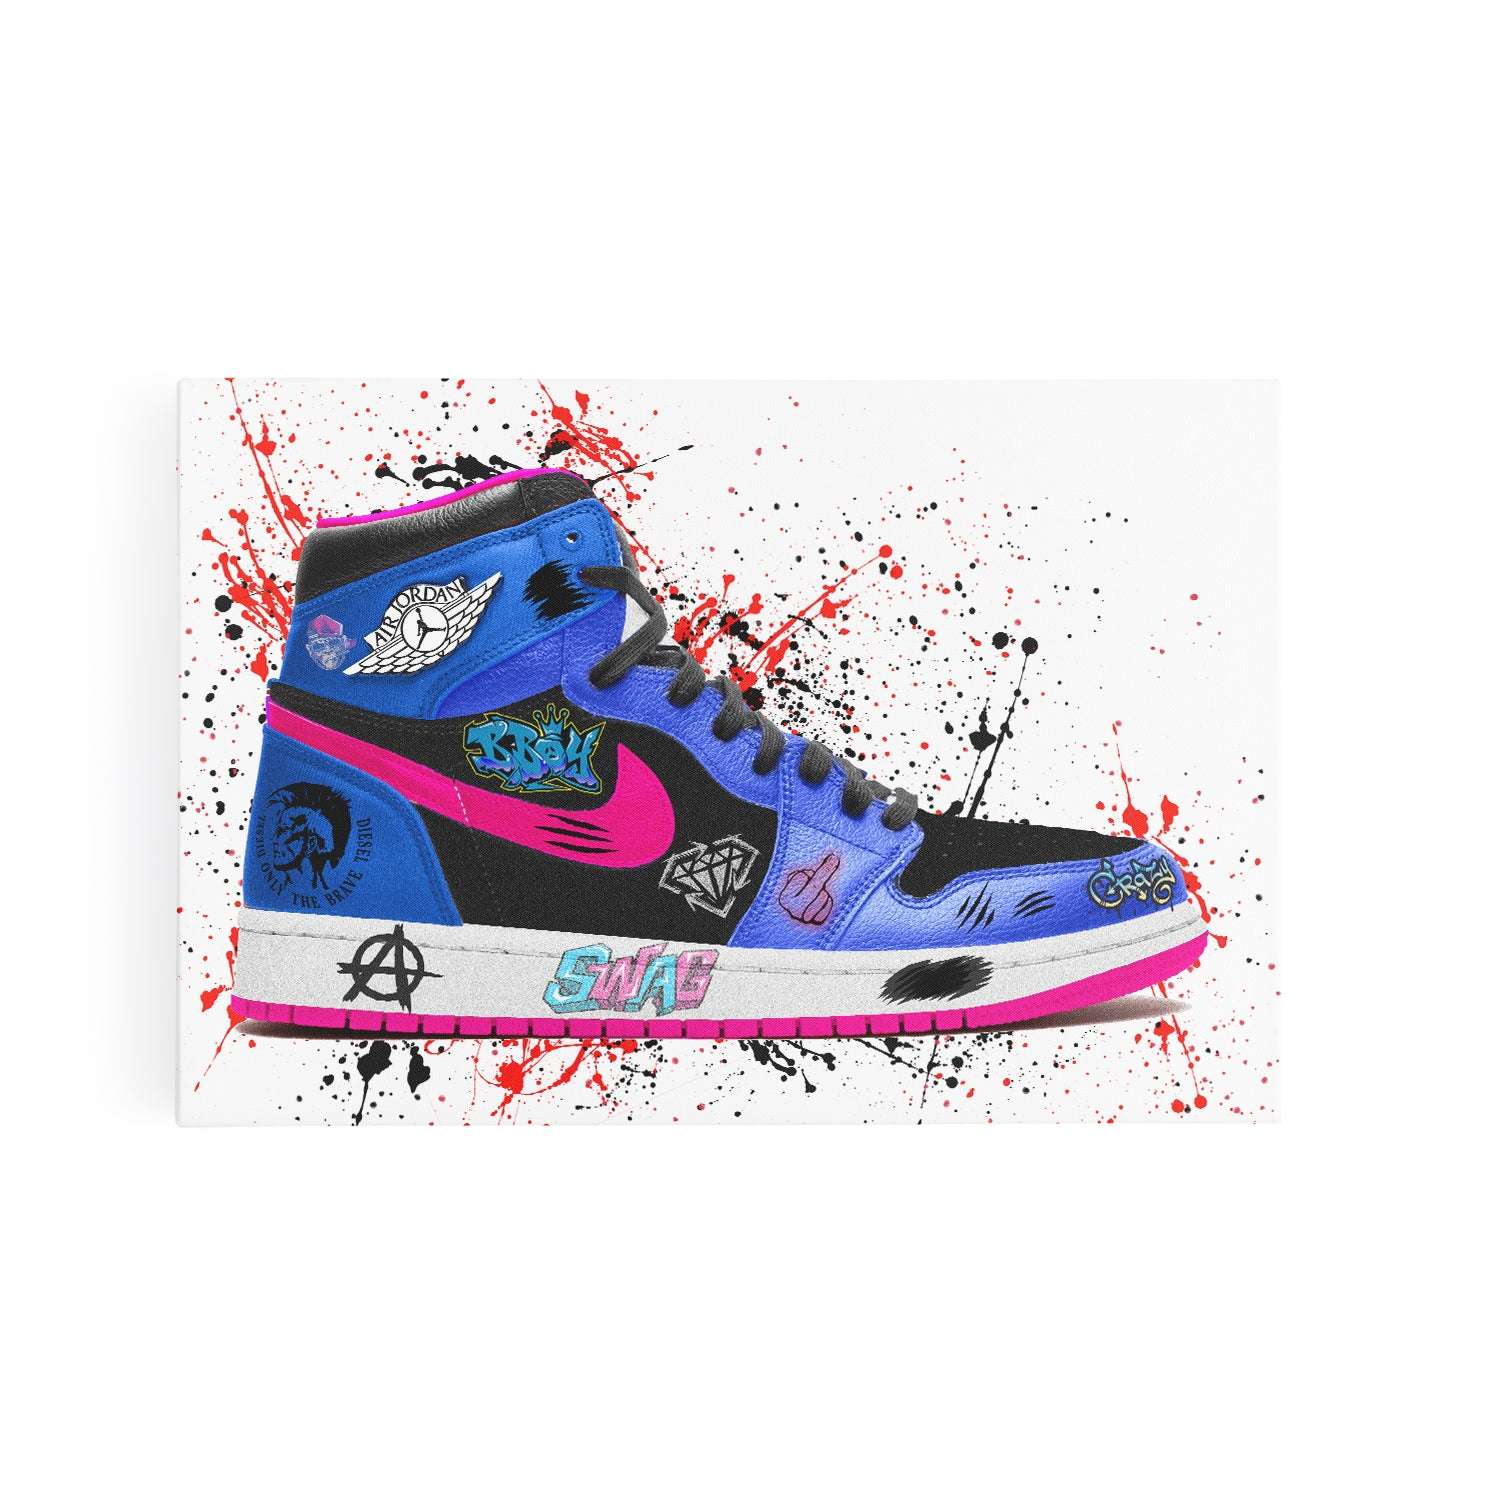 Pink Nike Jordan Air Graffiti Sneaker